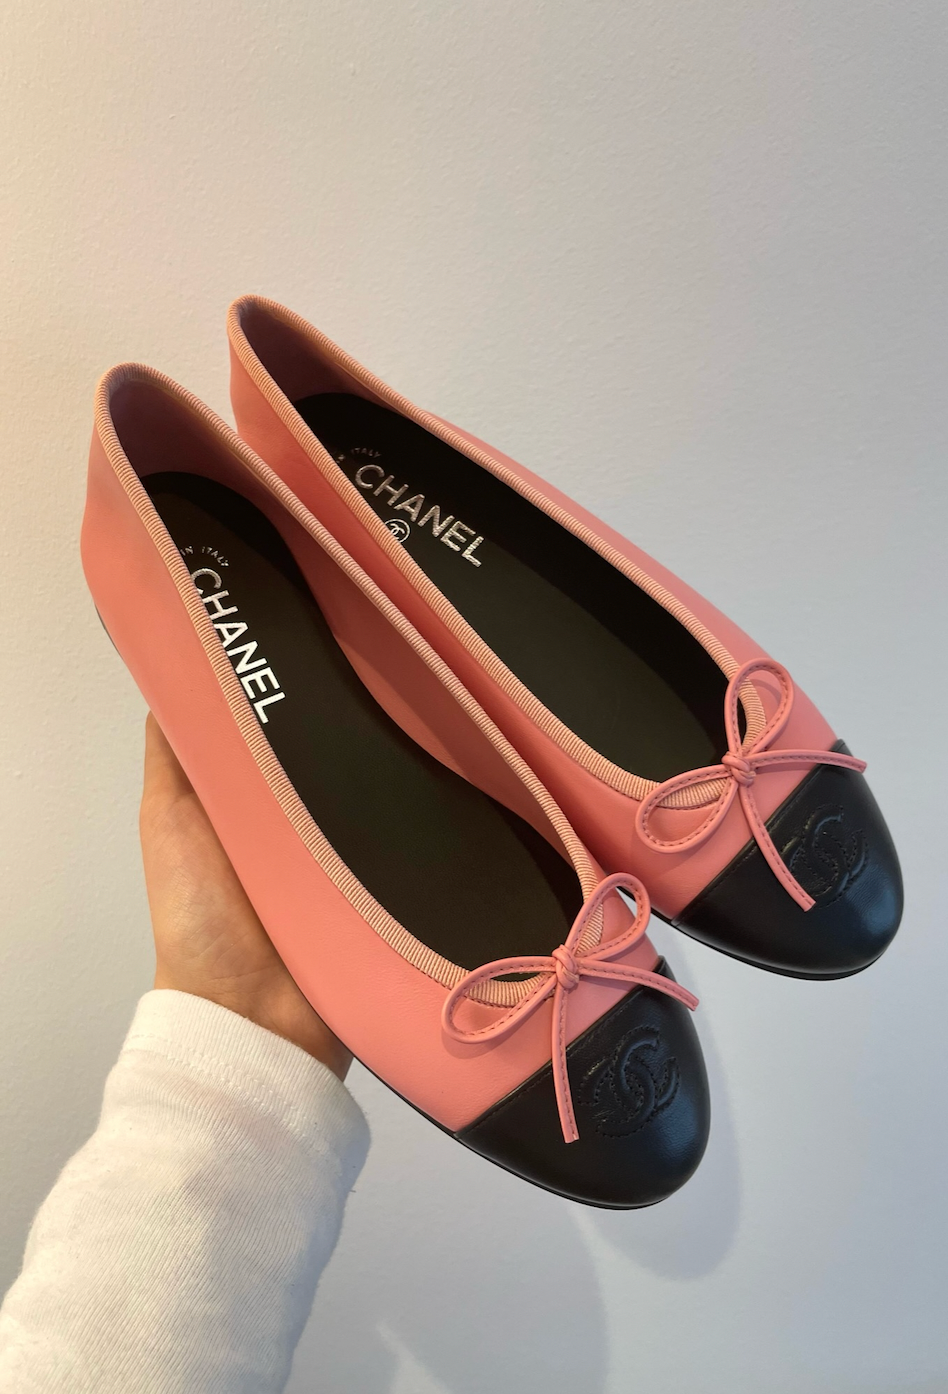 Chanel Lambskin Ballet Flats (Pink/Black)